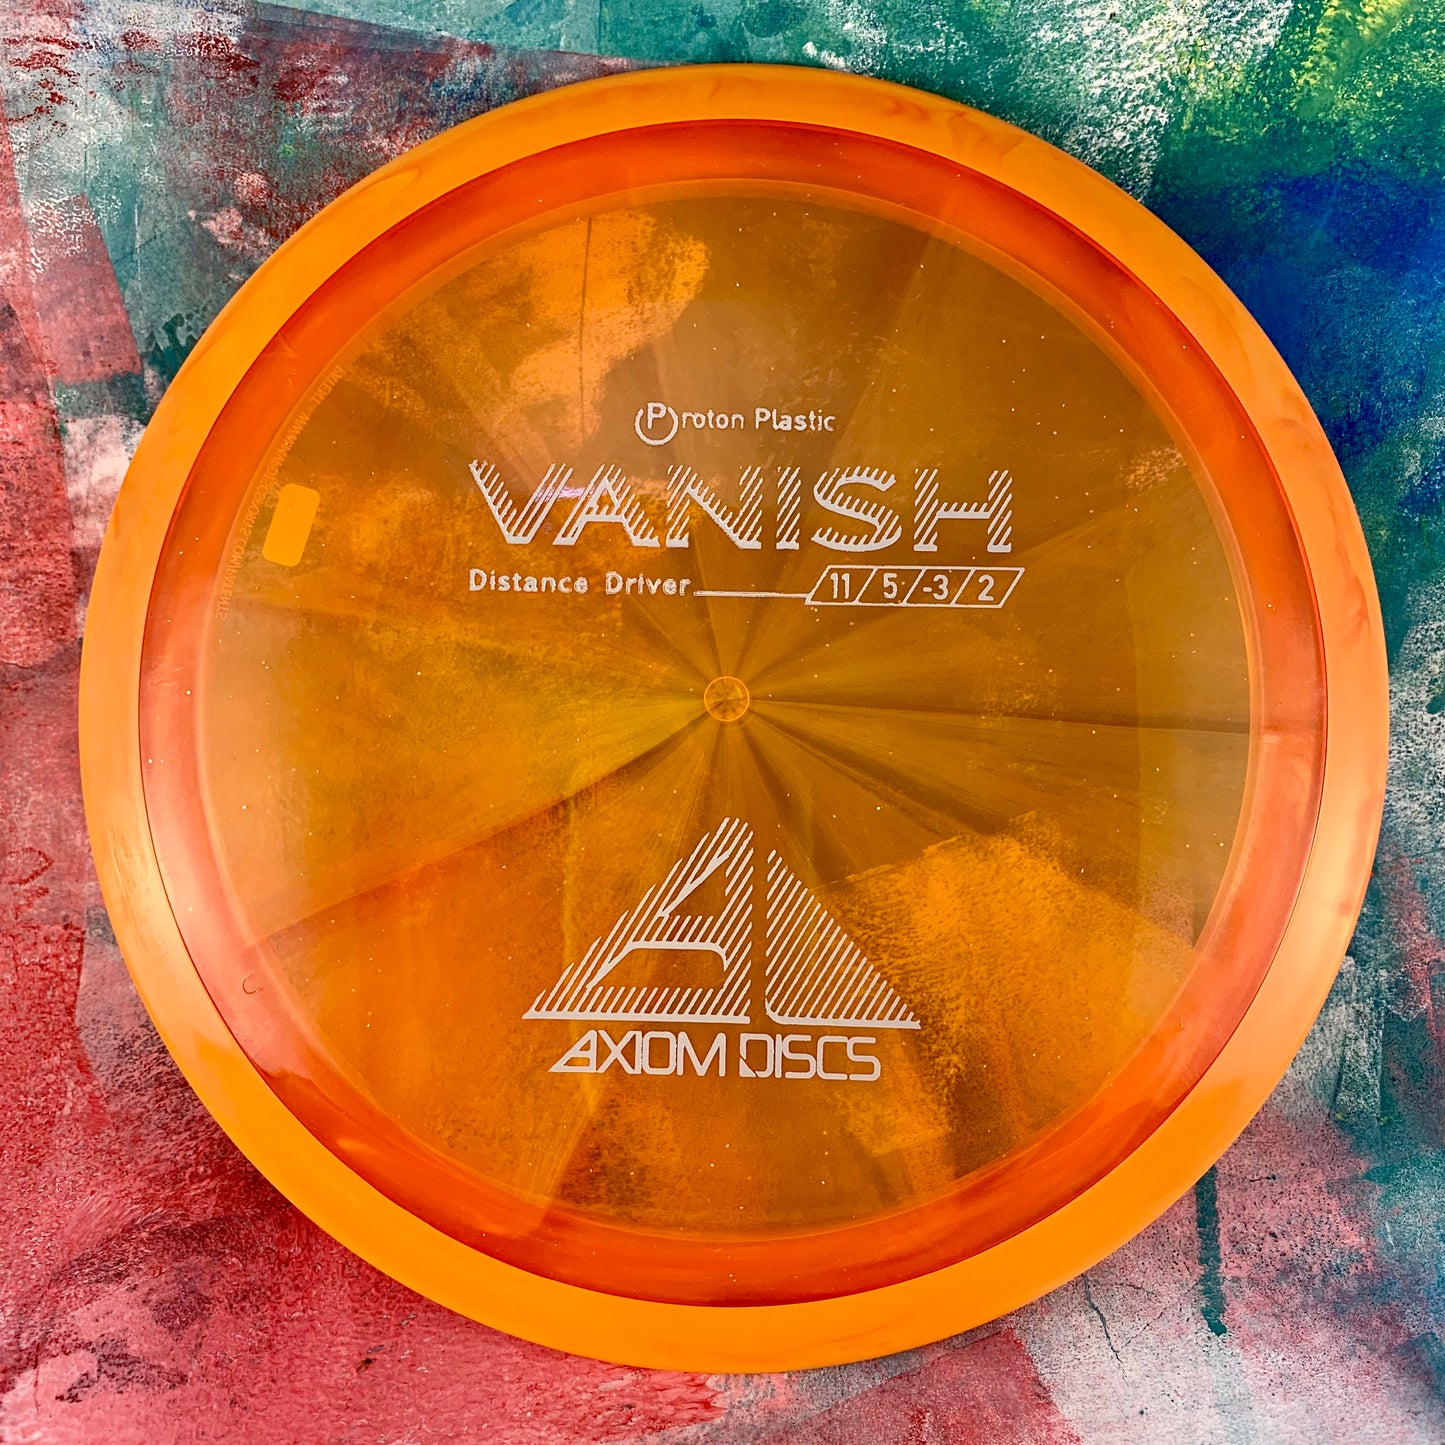 Axiom Discs : Vanish (Proton plastic)